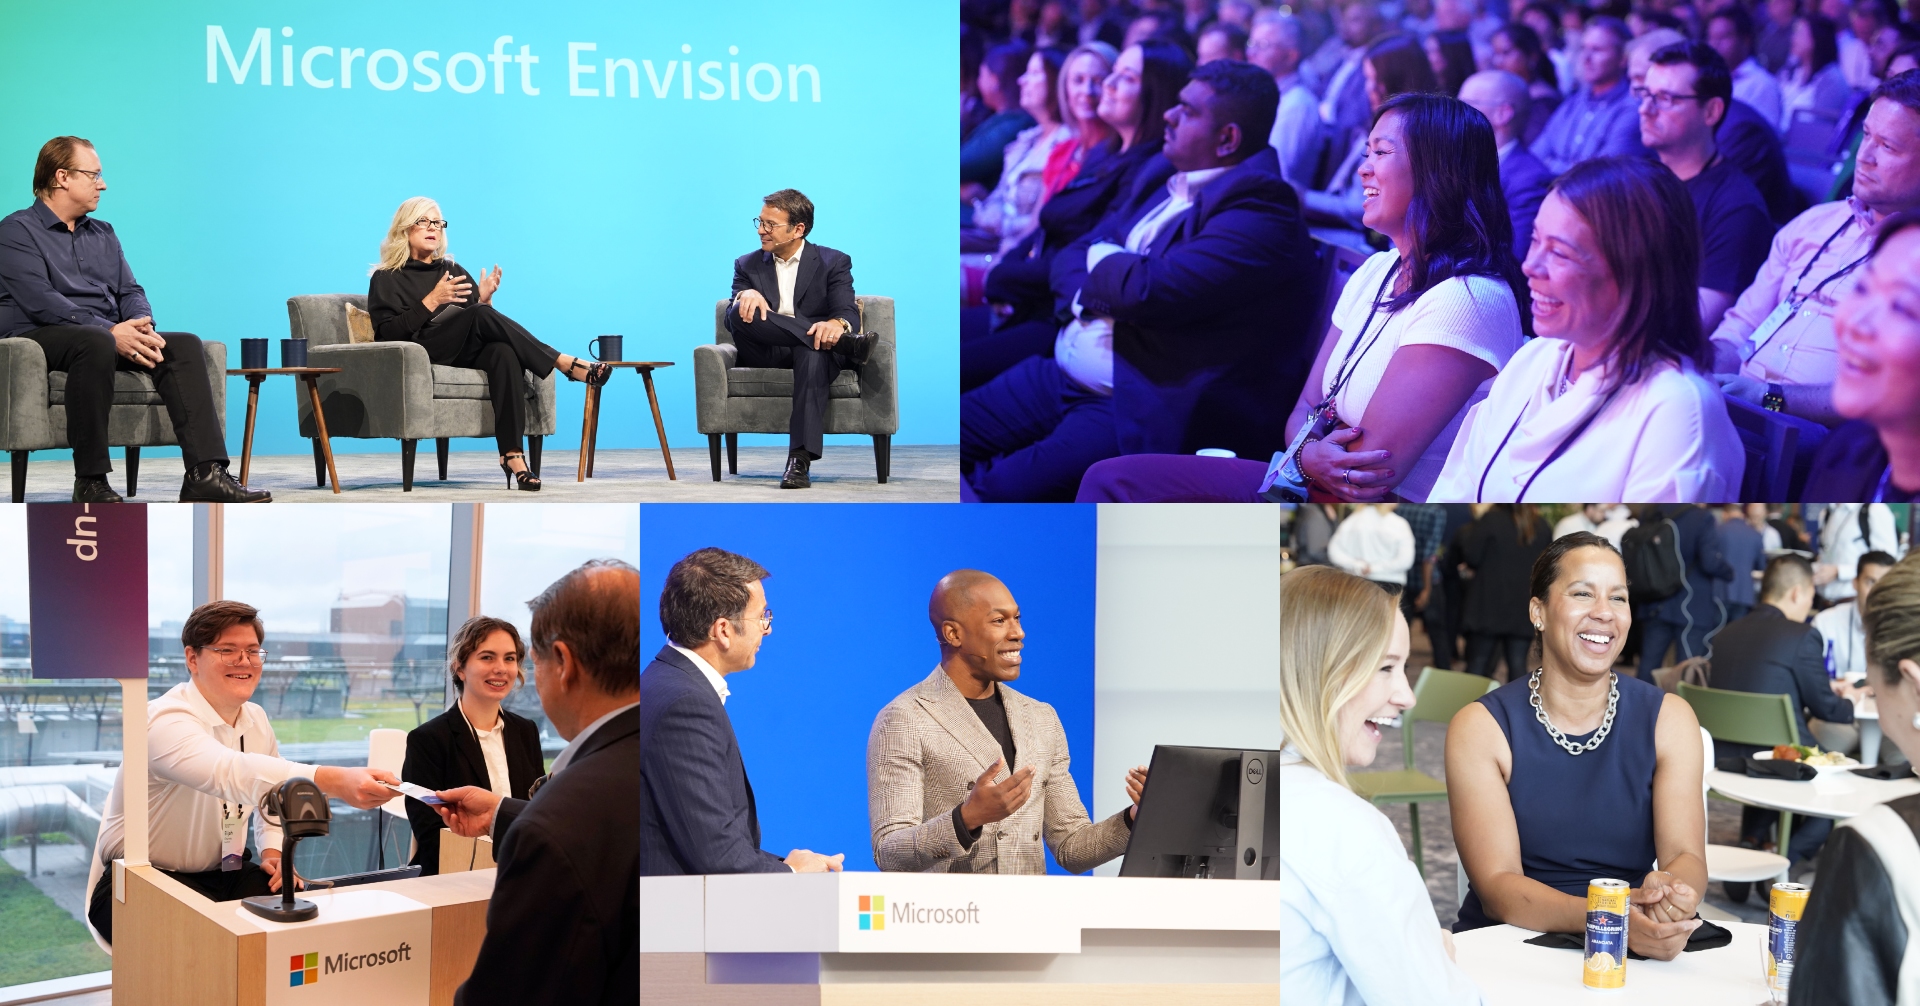 Microsoft Envision photo collage